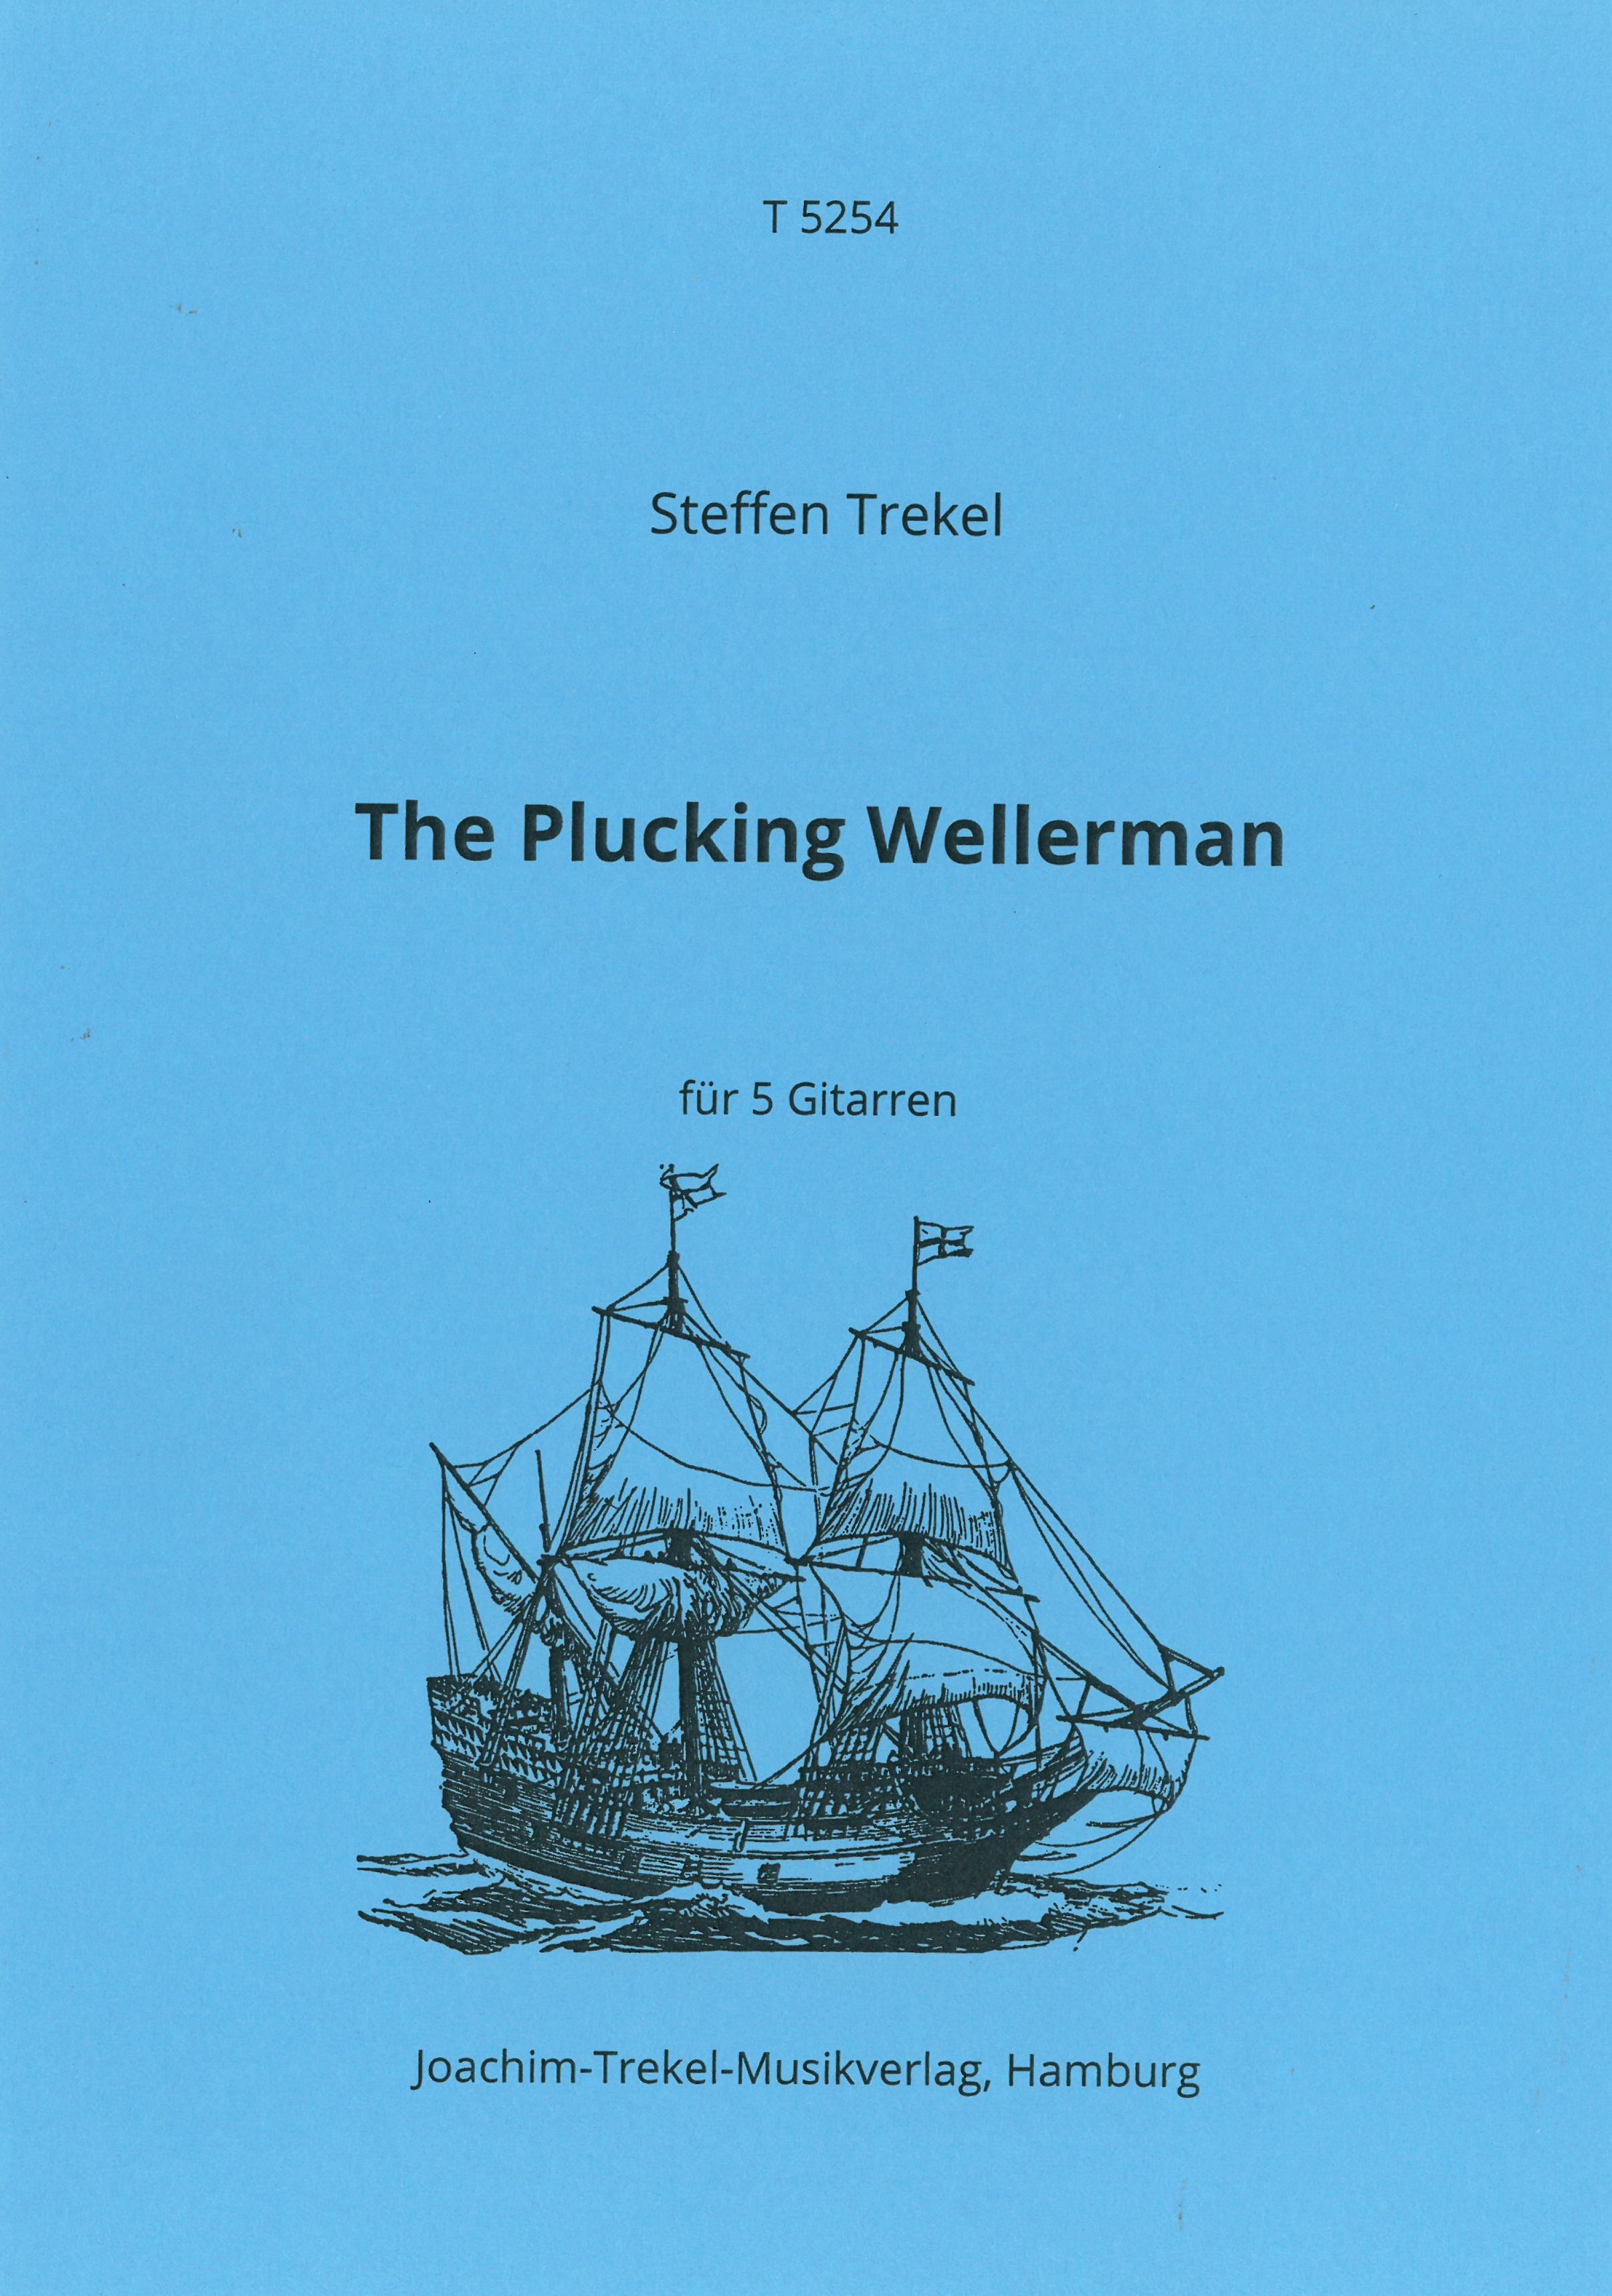 The Plucking Wellerman